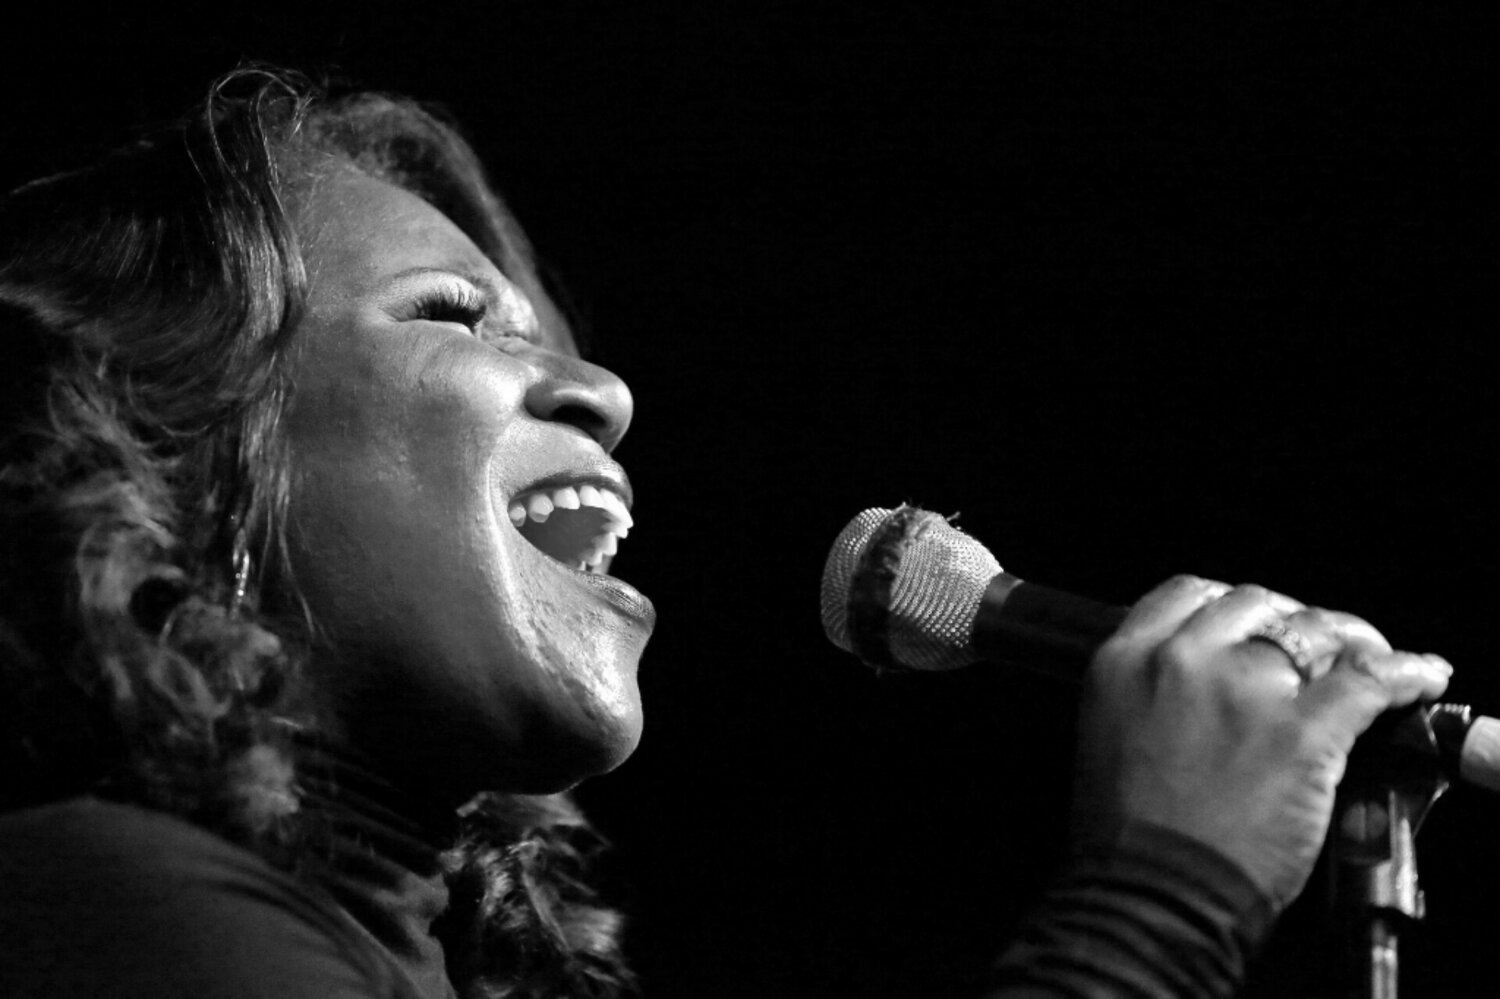 Tammy McCann singing, grayscale image